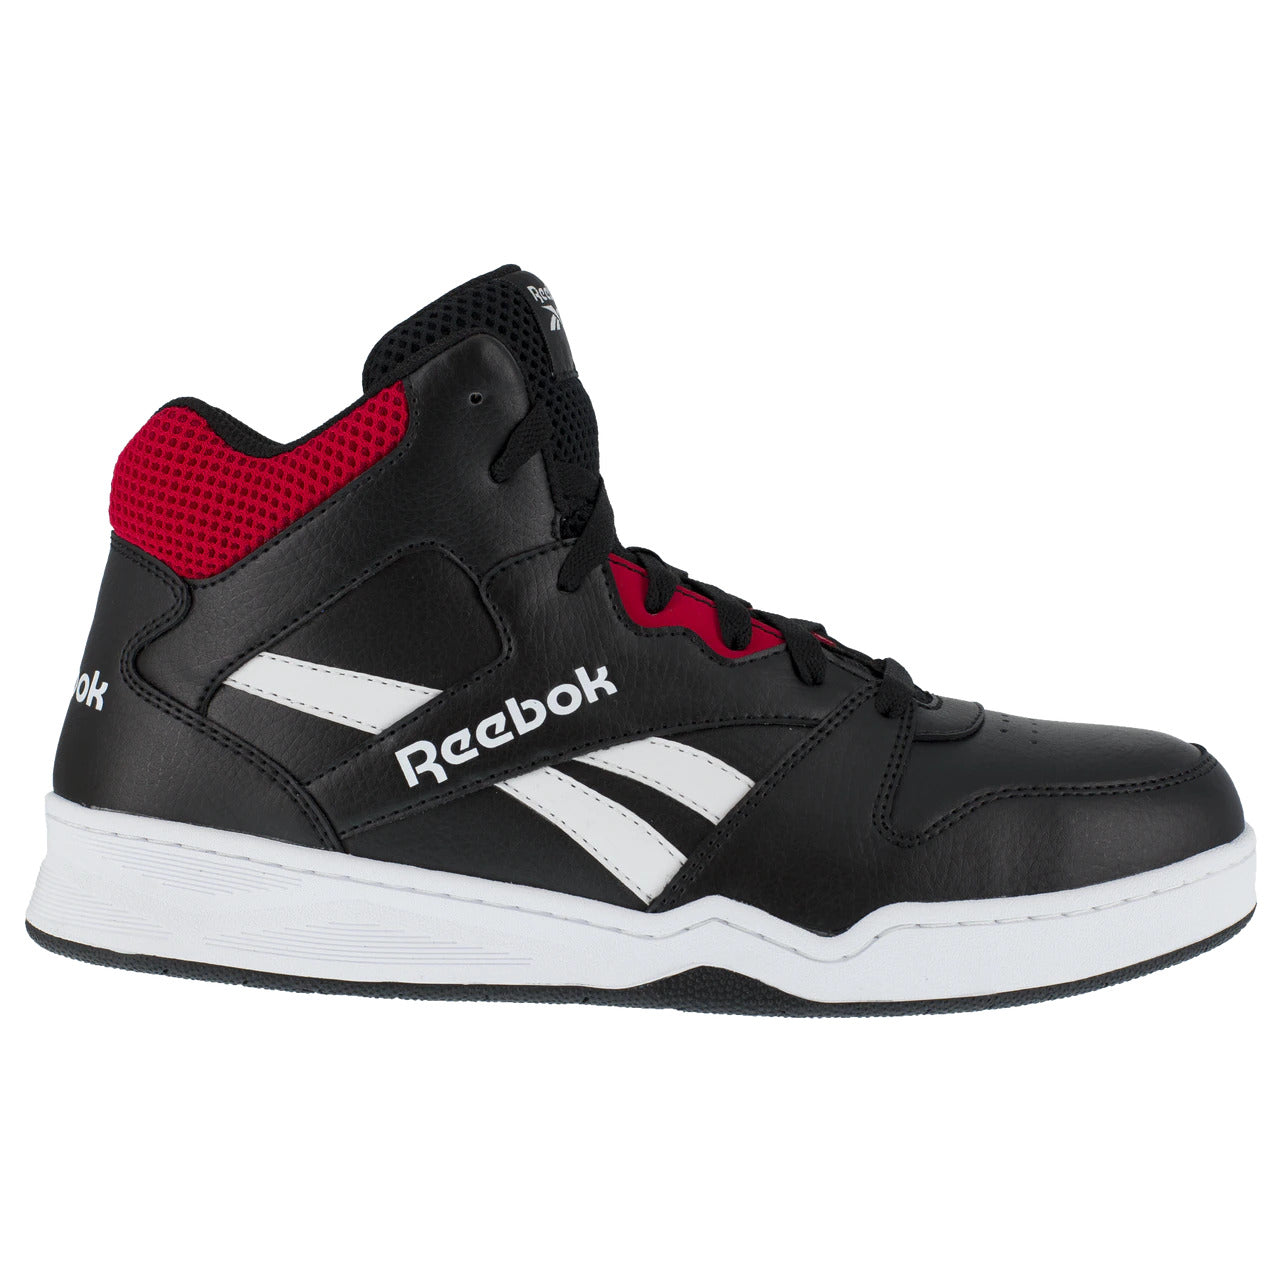 RB4132 Men's High Top Composite Toe Work Sneaker (Black/Red/White)